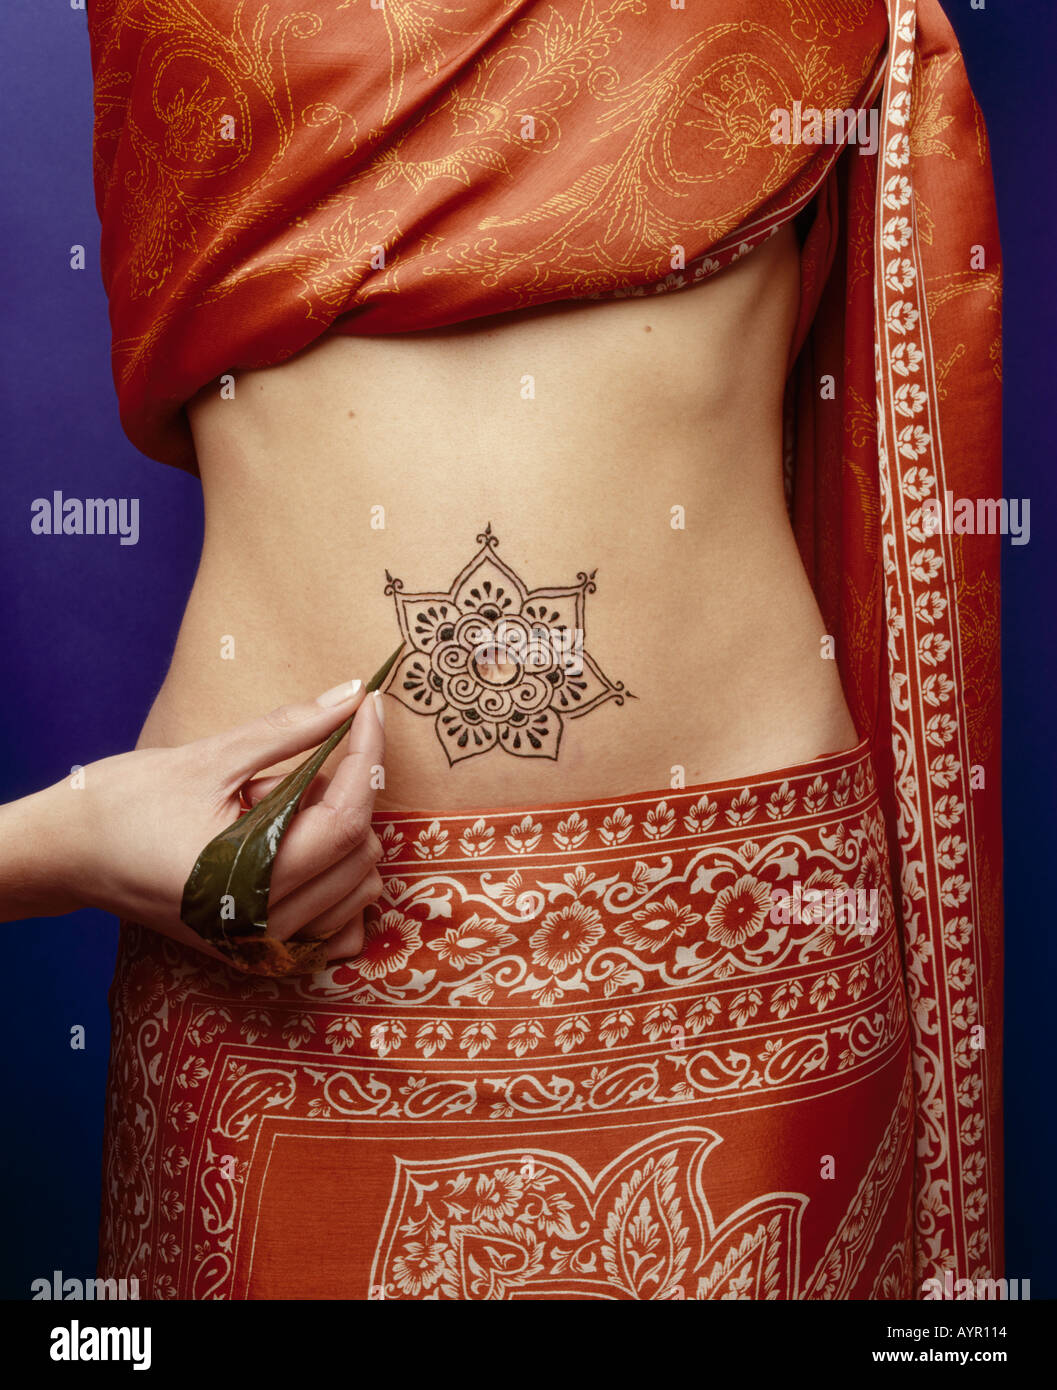 Henna belly button tattoo Stock Photo